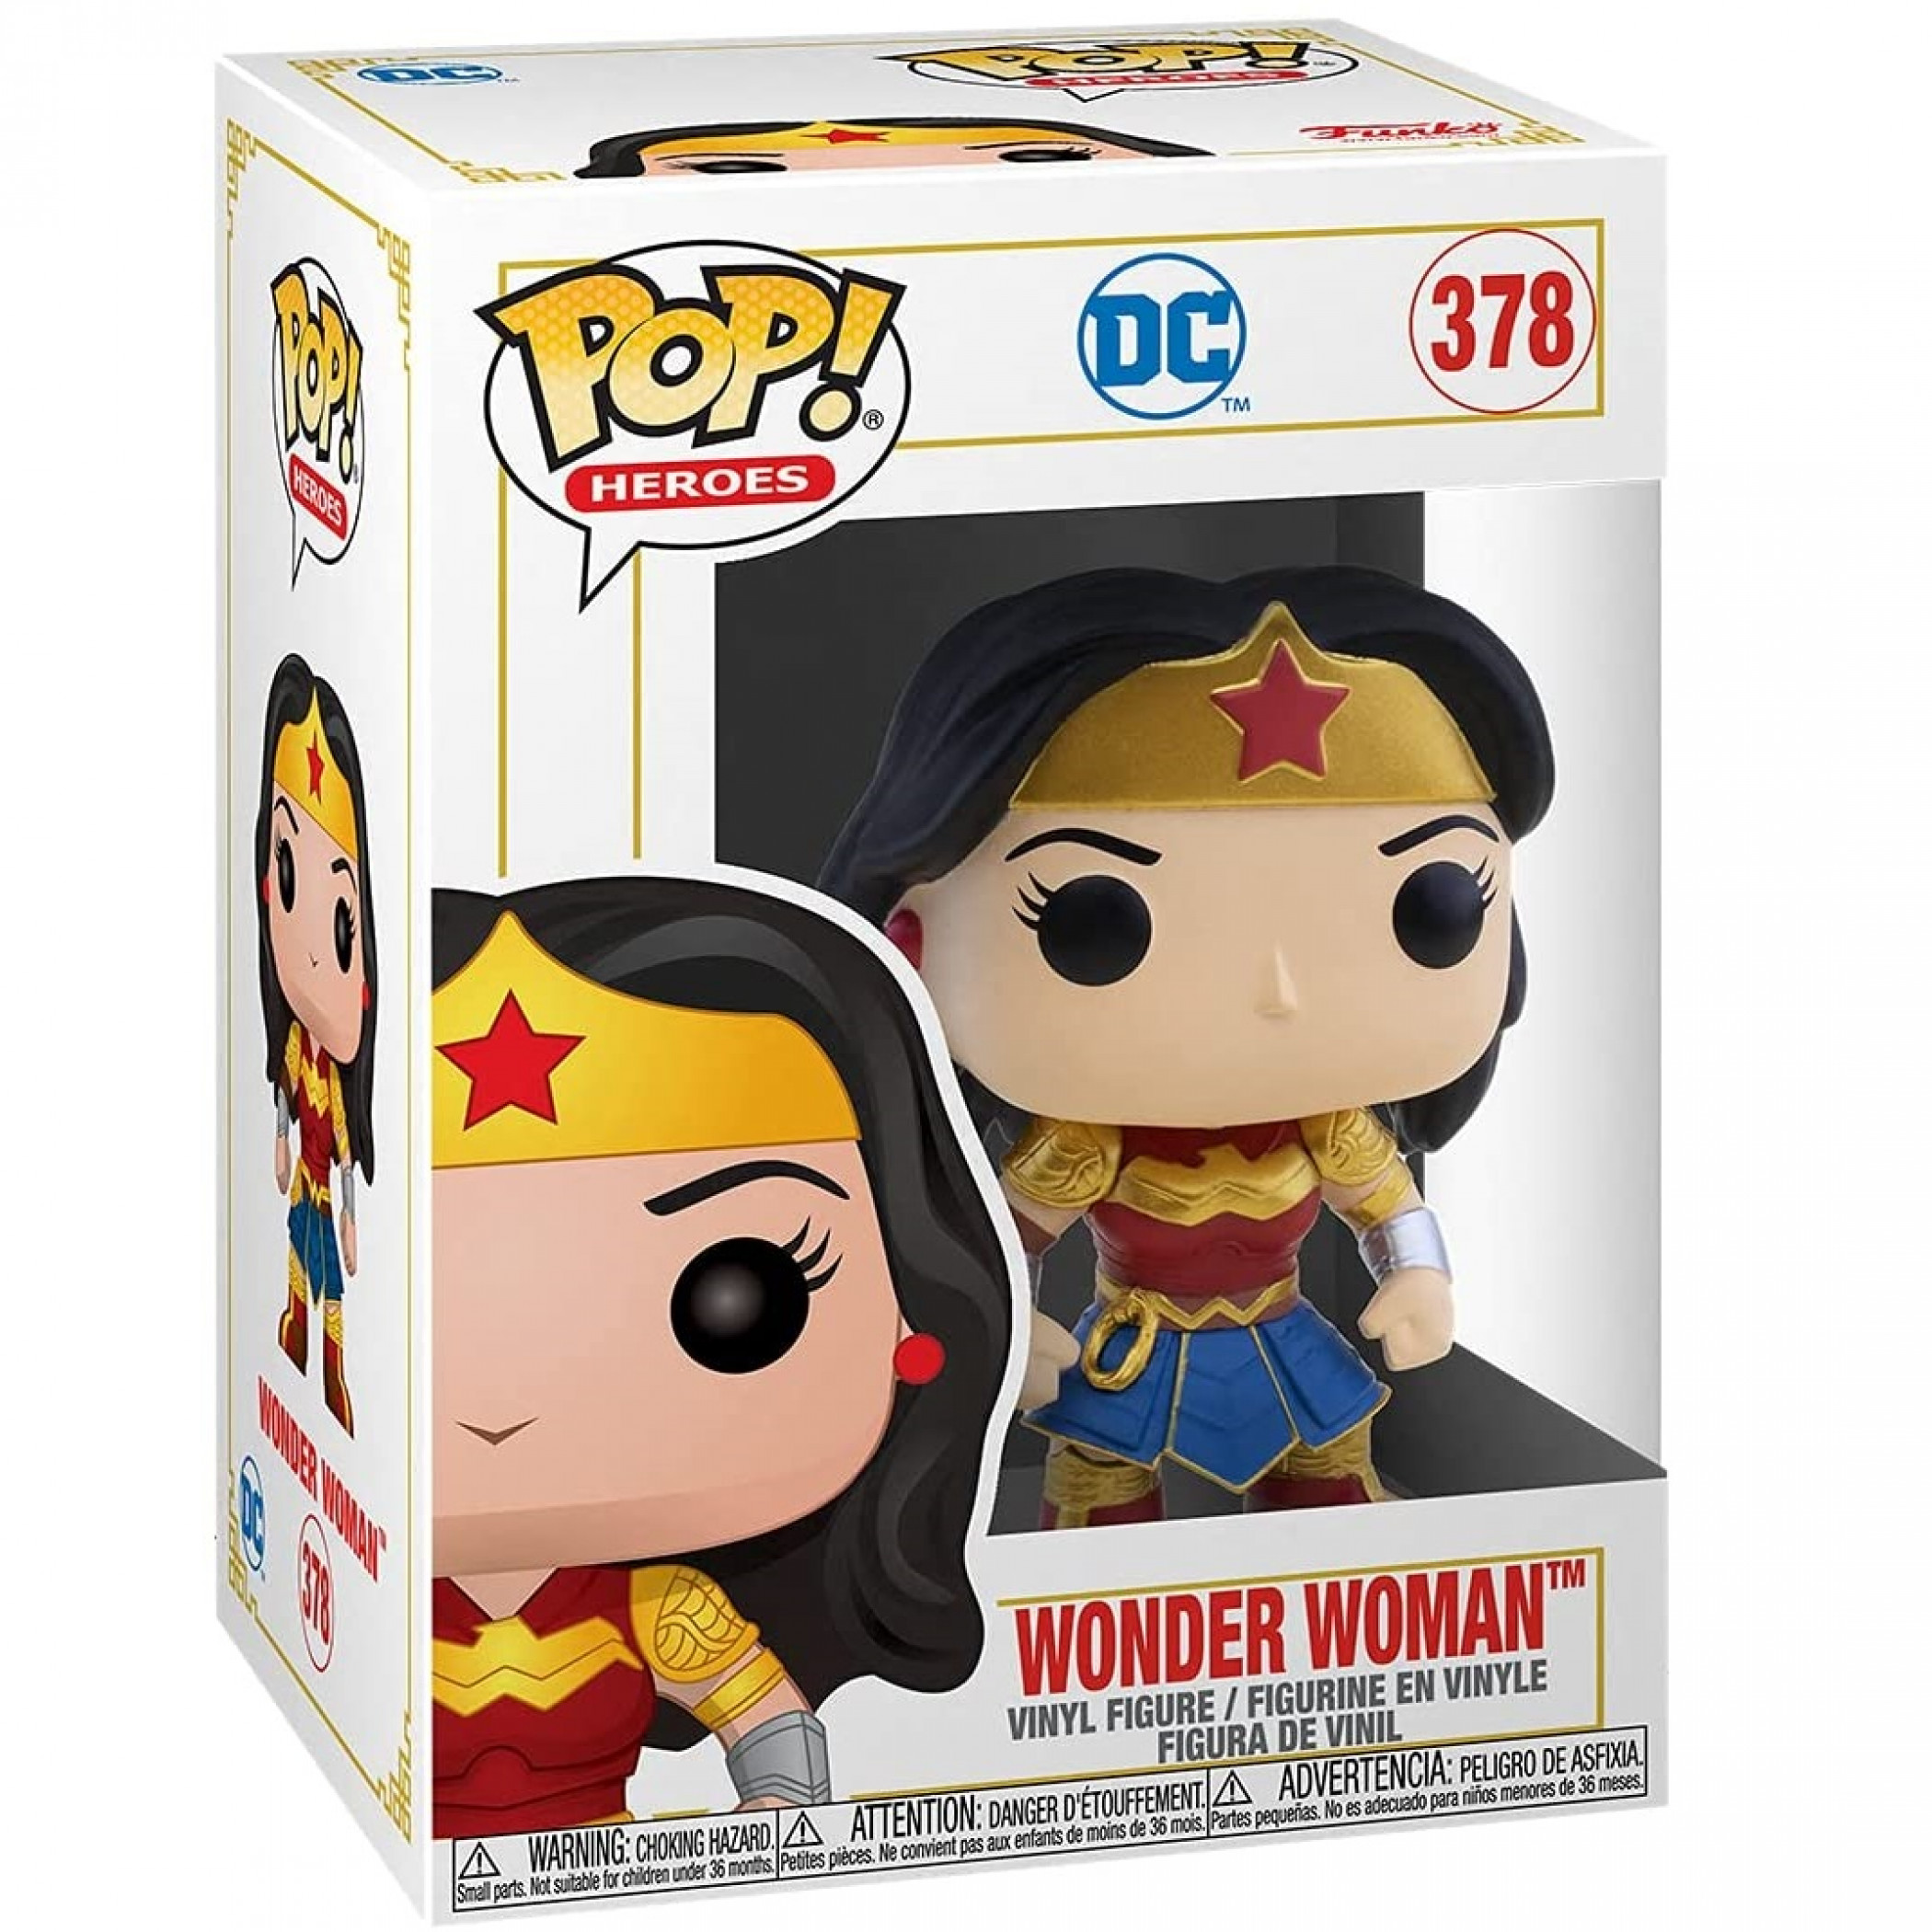 Wonder Woman DC Comics Imperial Palace Funko Pop! Vinyl Figure